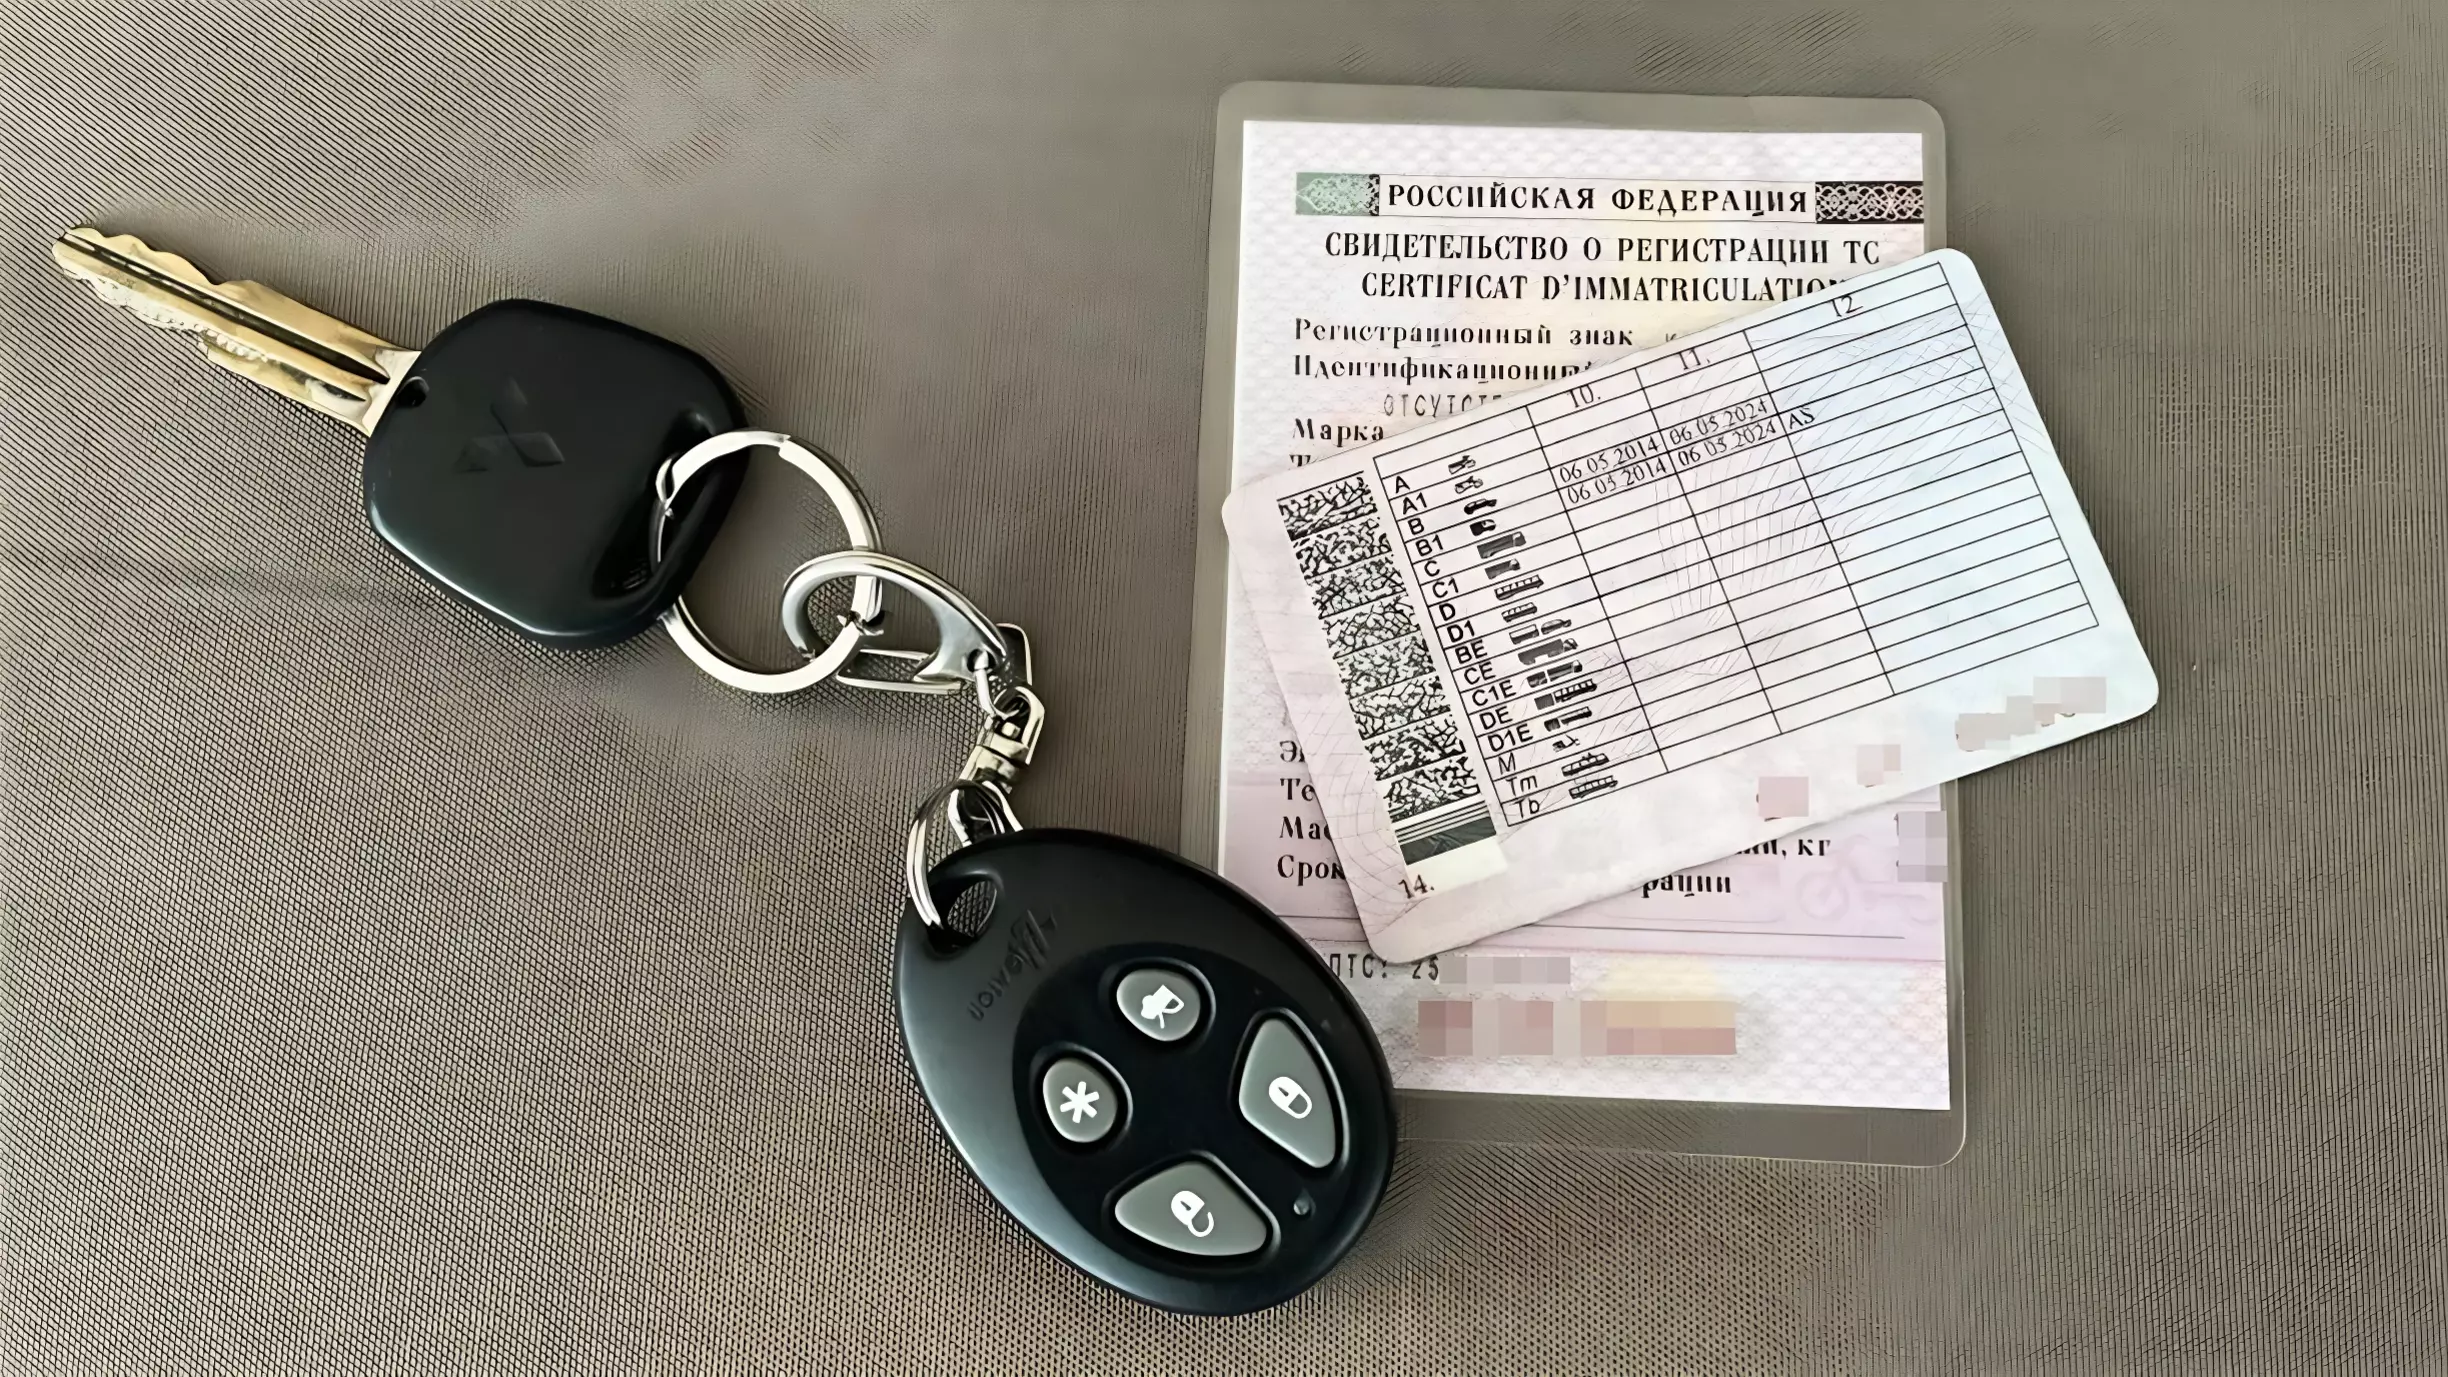 В ХМАО под суд отправят водителя с фальшивыми документами на авто